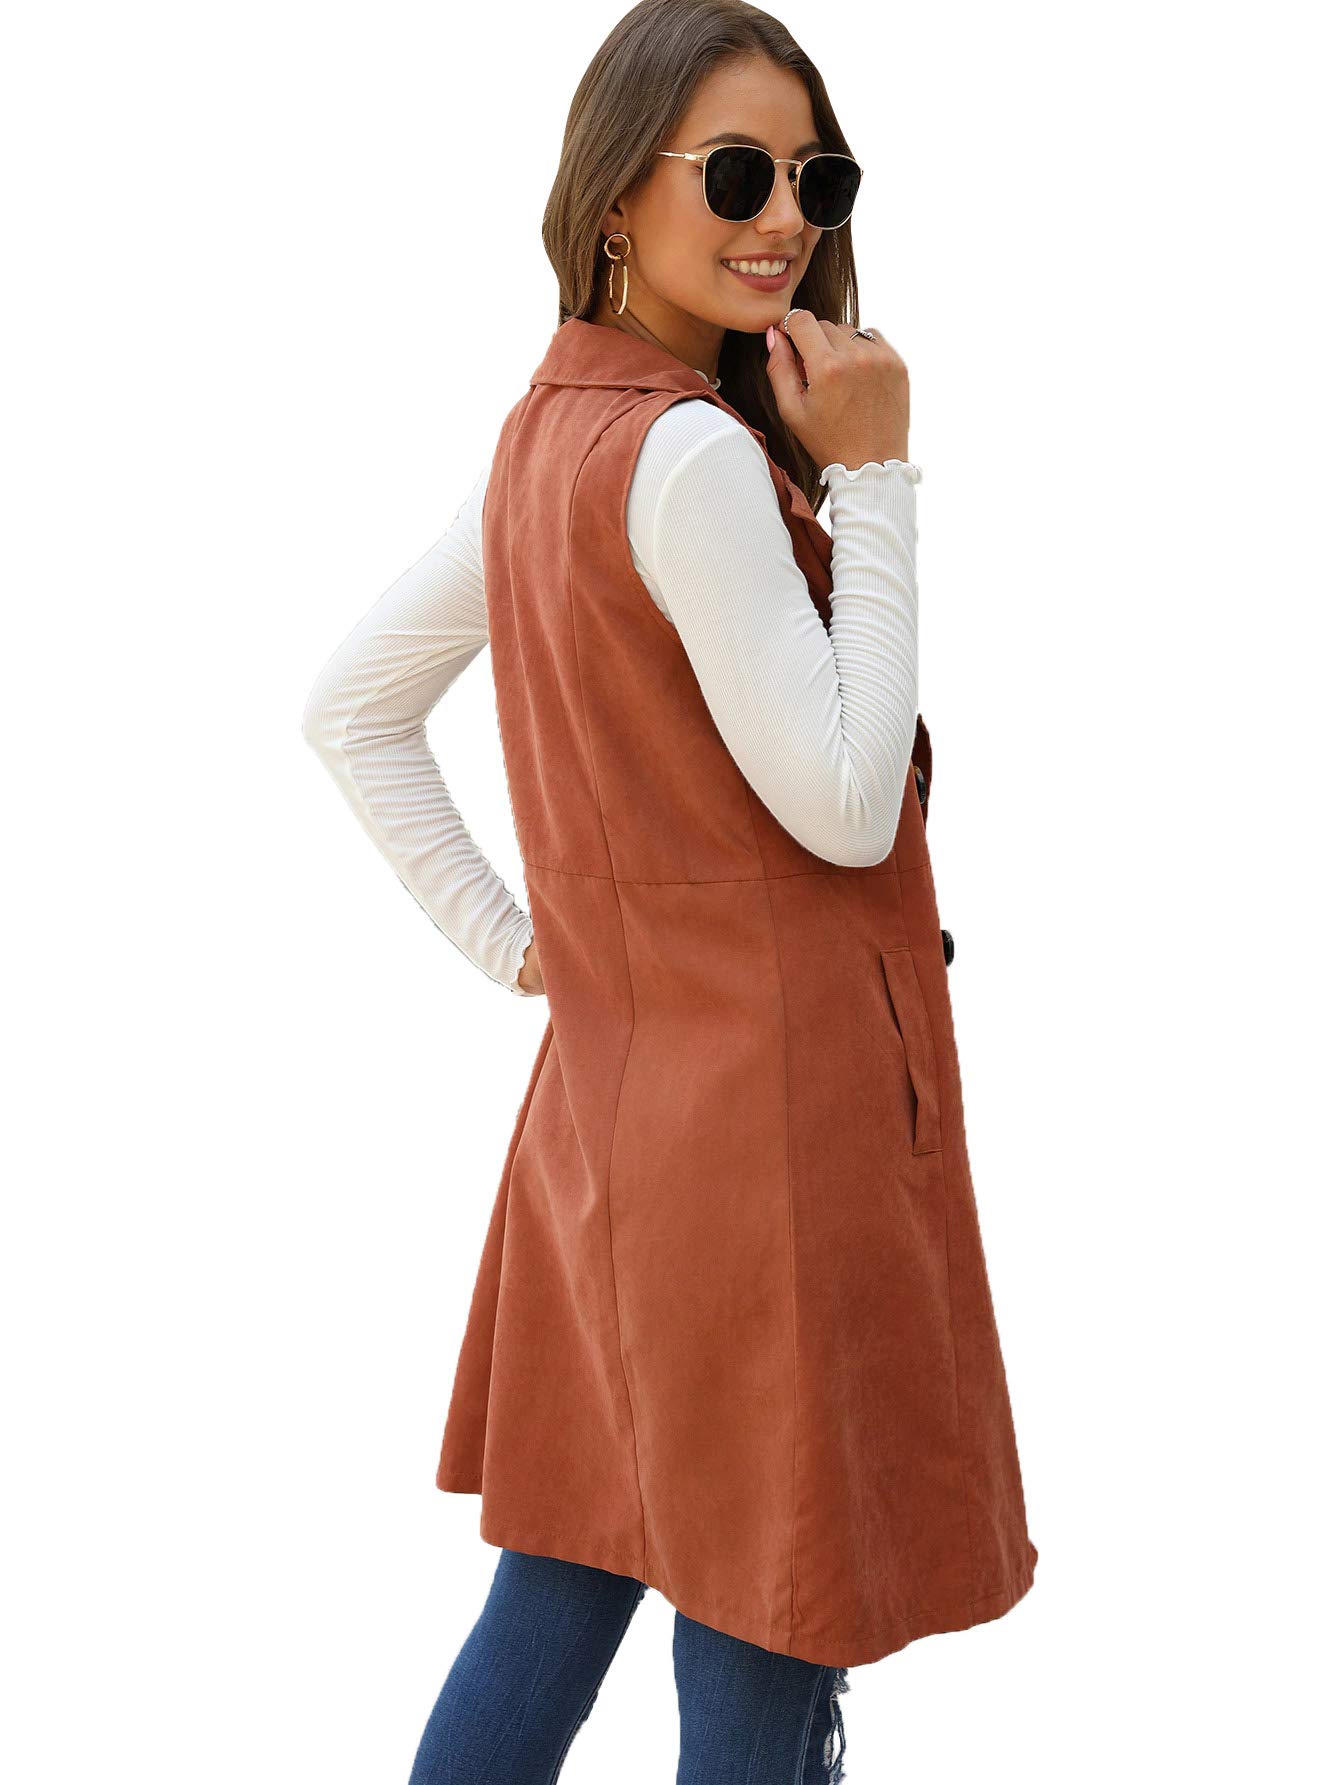 SheIn Women's Double Breasted Long Vest Jacket Casual Sleeveless Pocket Outerwear Longline